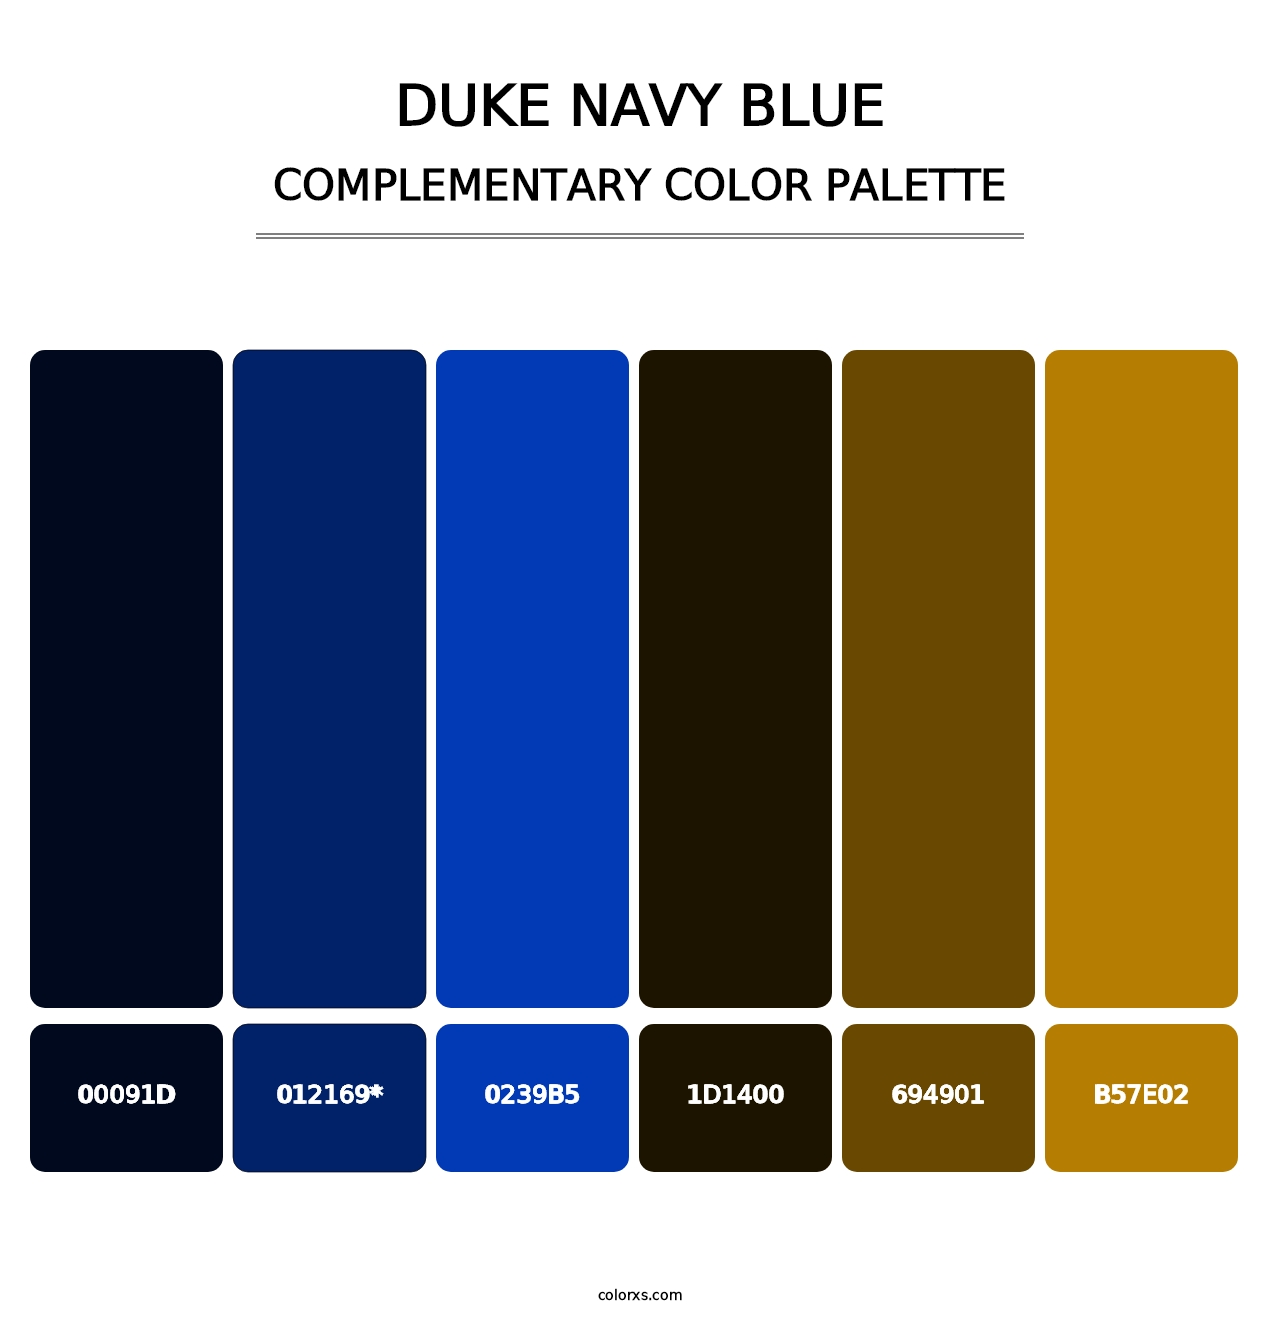 Duke Navy Blue - Complementary Color Palette